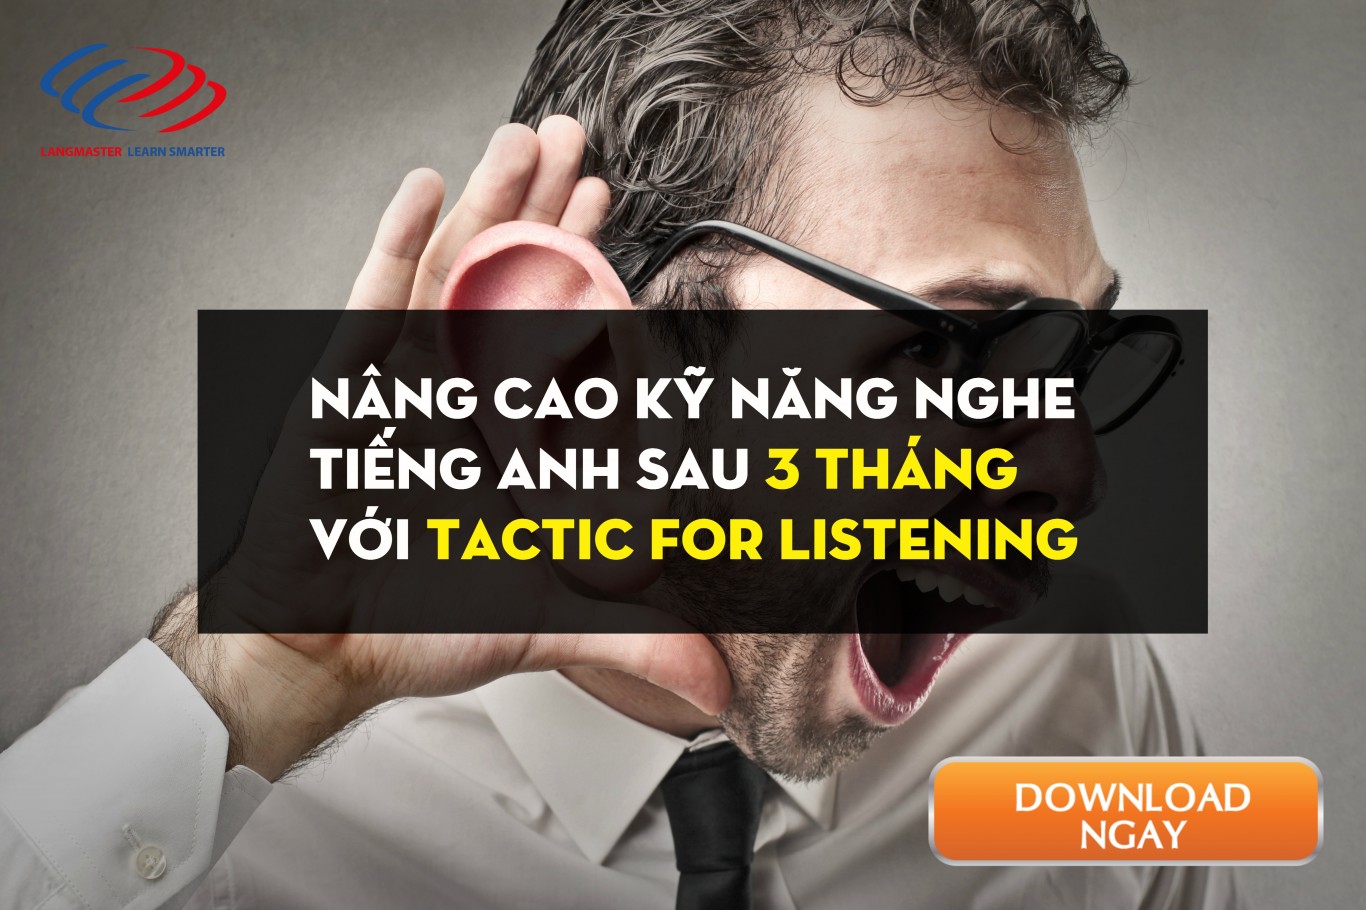  Tactic-for-listening.jpg